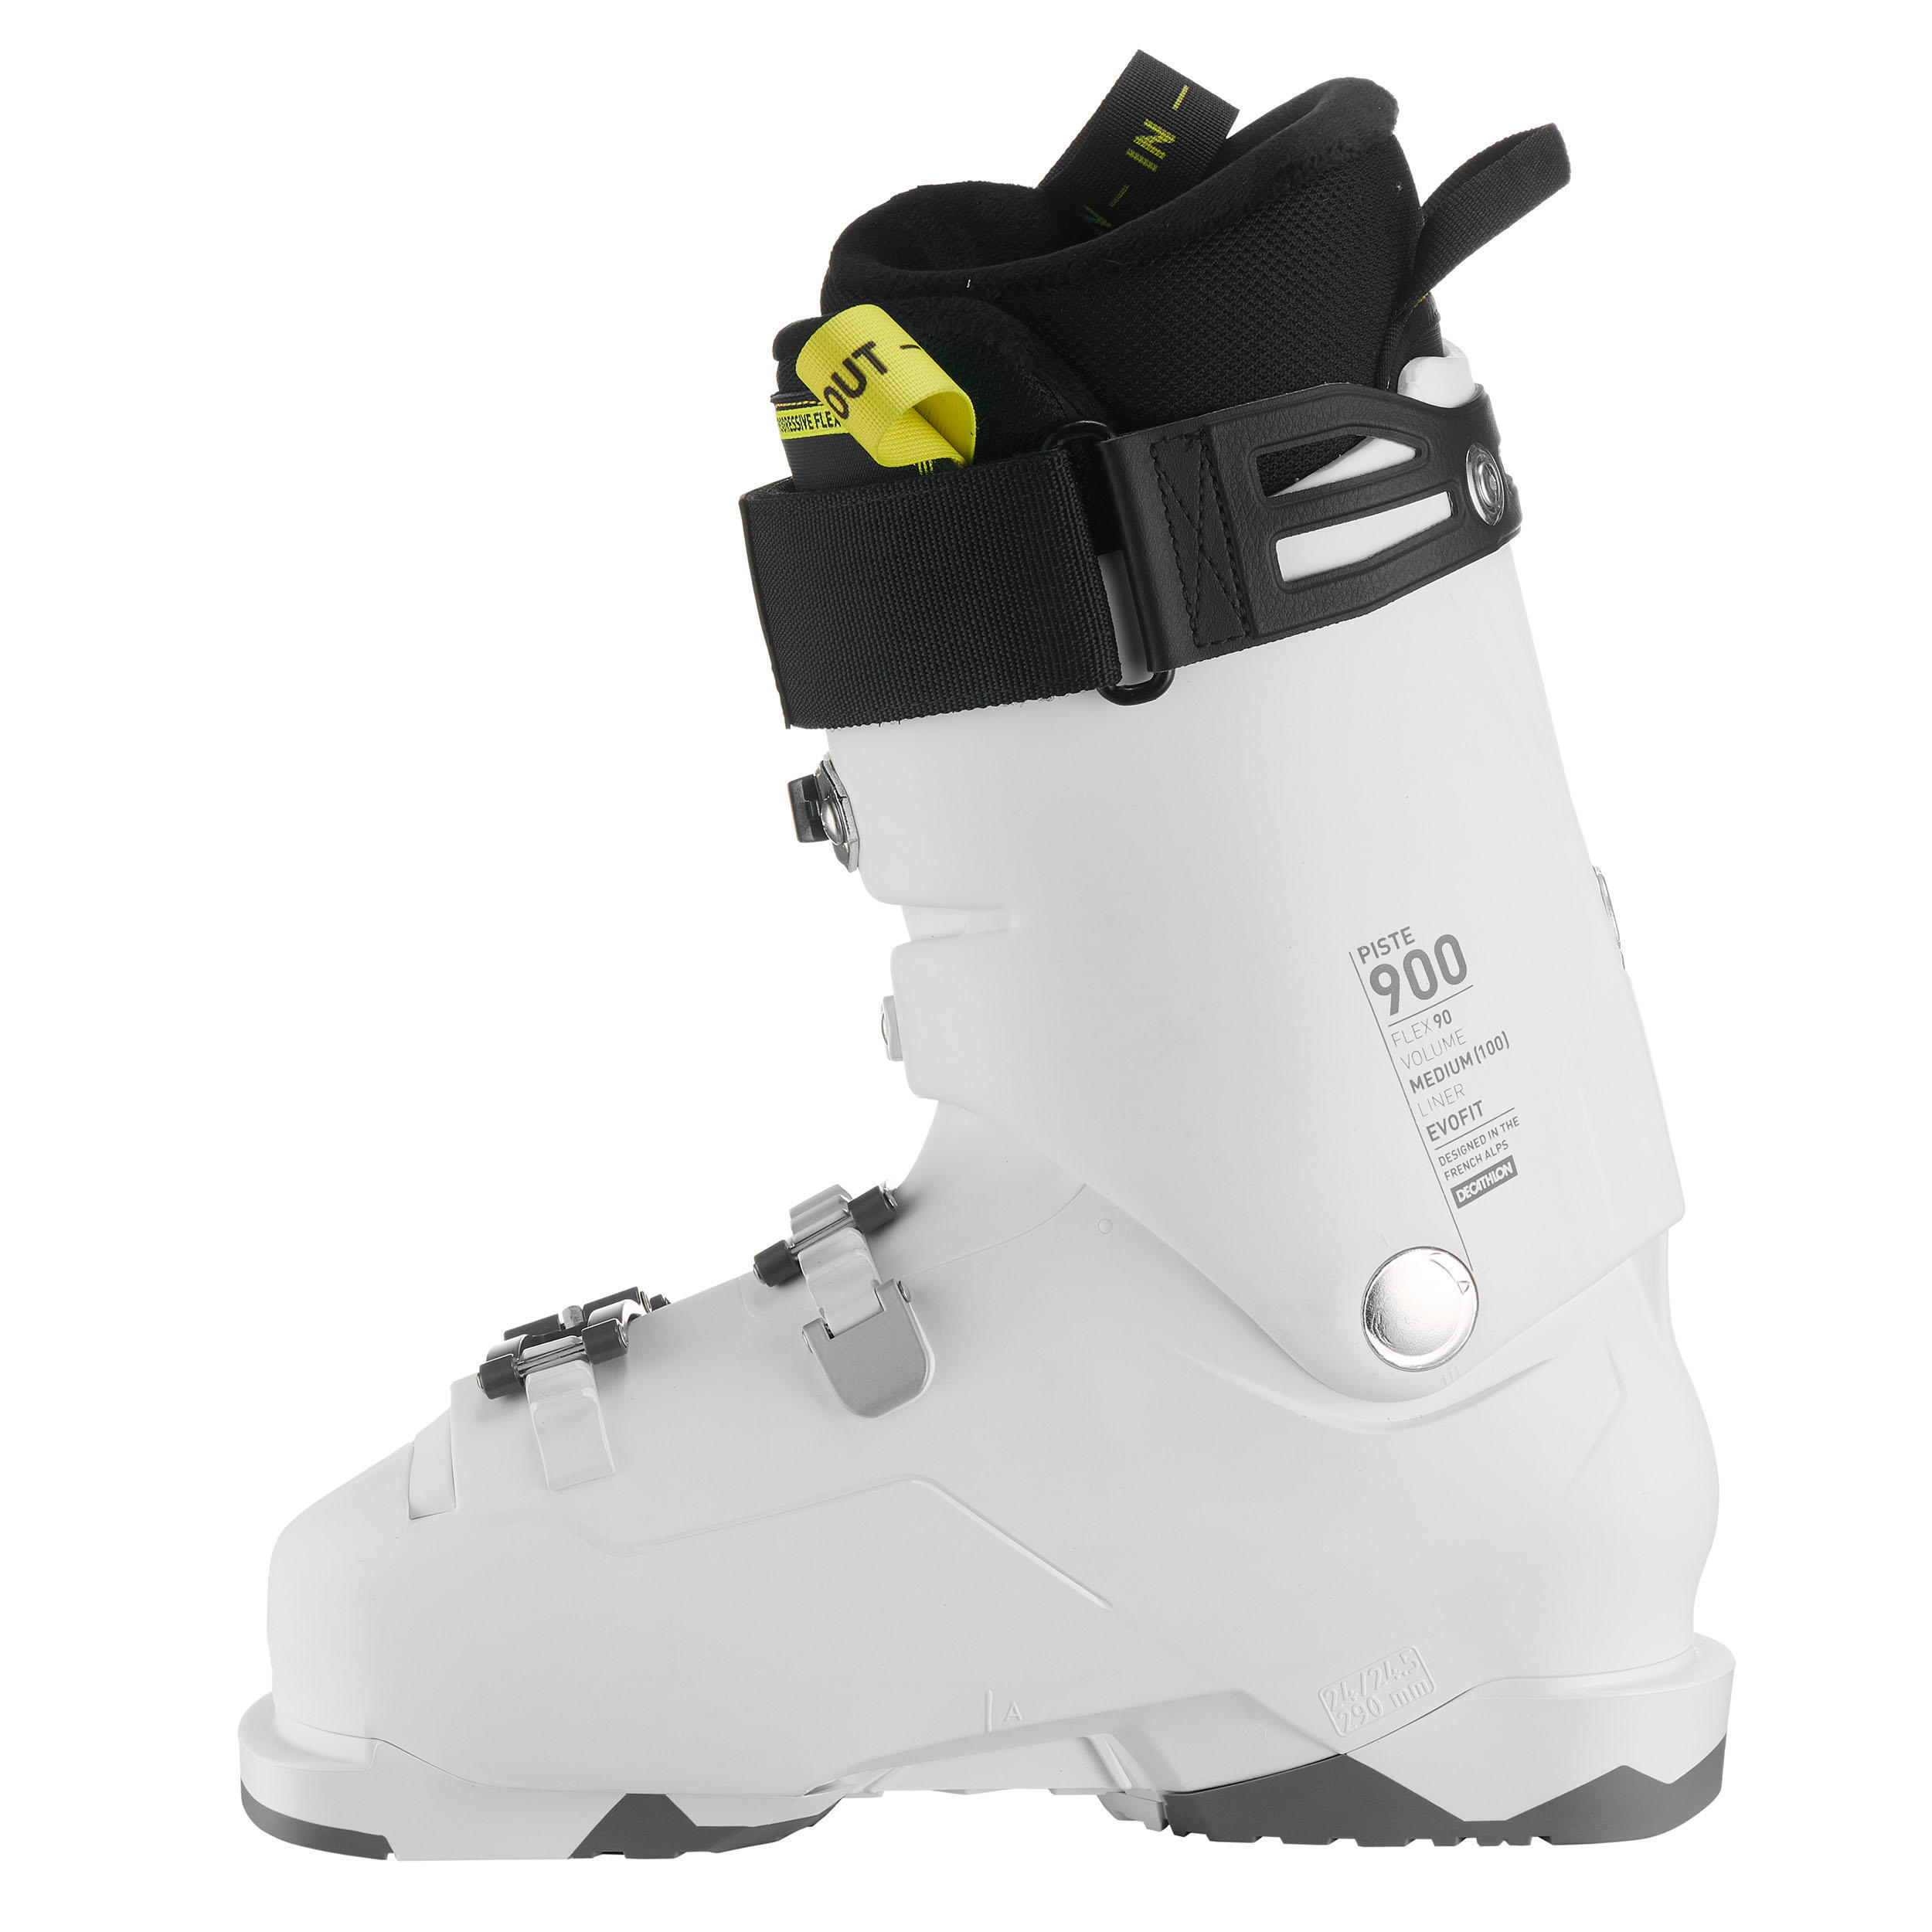 Refurbished Downhill Ski Boots Fit 900 White - C Grade 4/7